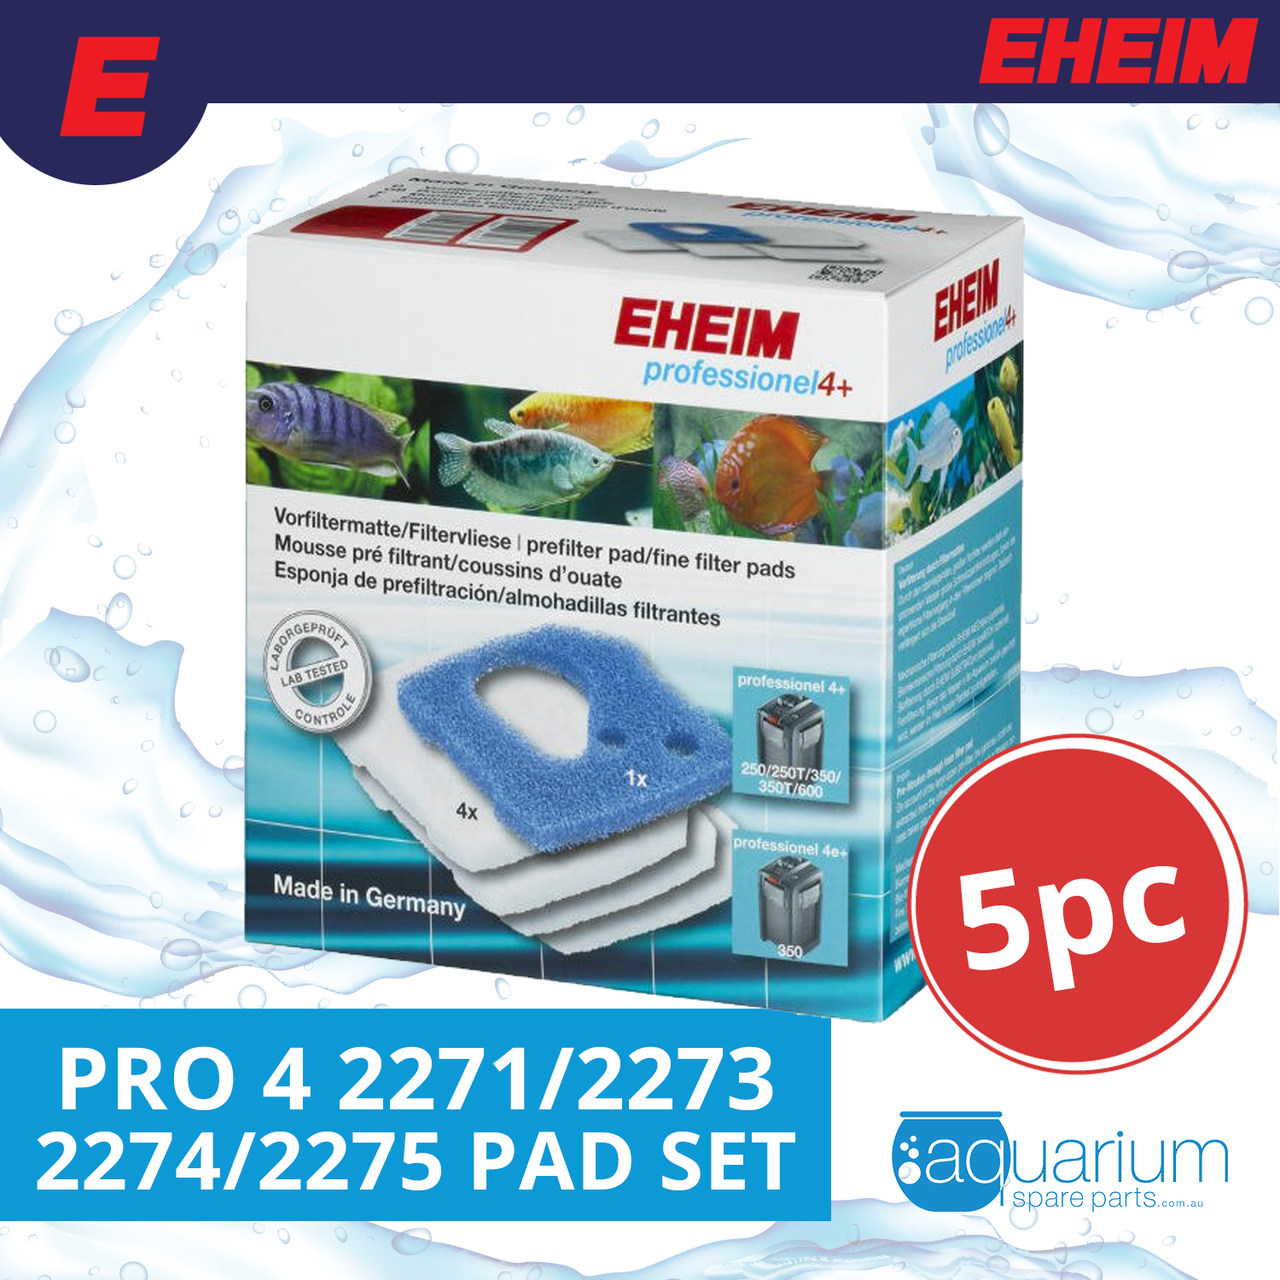 Eheim Pro 4 2271 2273 2274 2275 Filter Pad Set 5pc